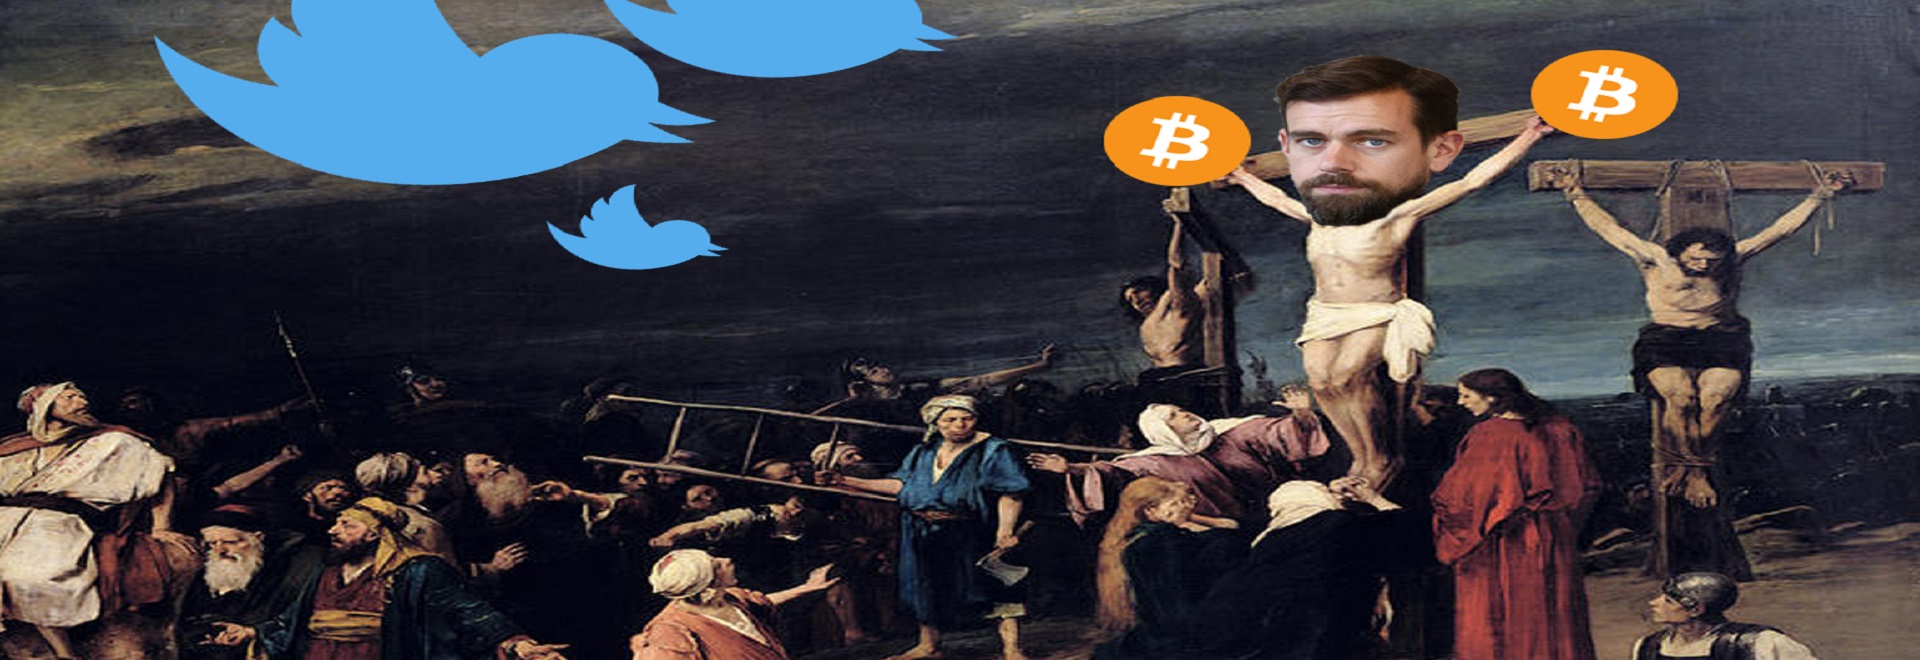 twitter dorsey bitcoin blockchain cryptocurrency - خلاصه اخبار جمعه مورخ 97/12/17